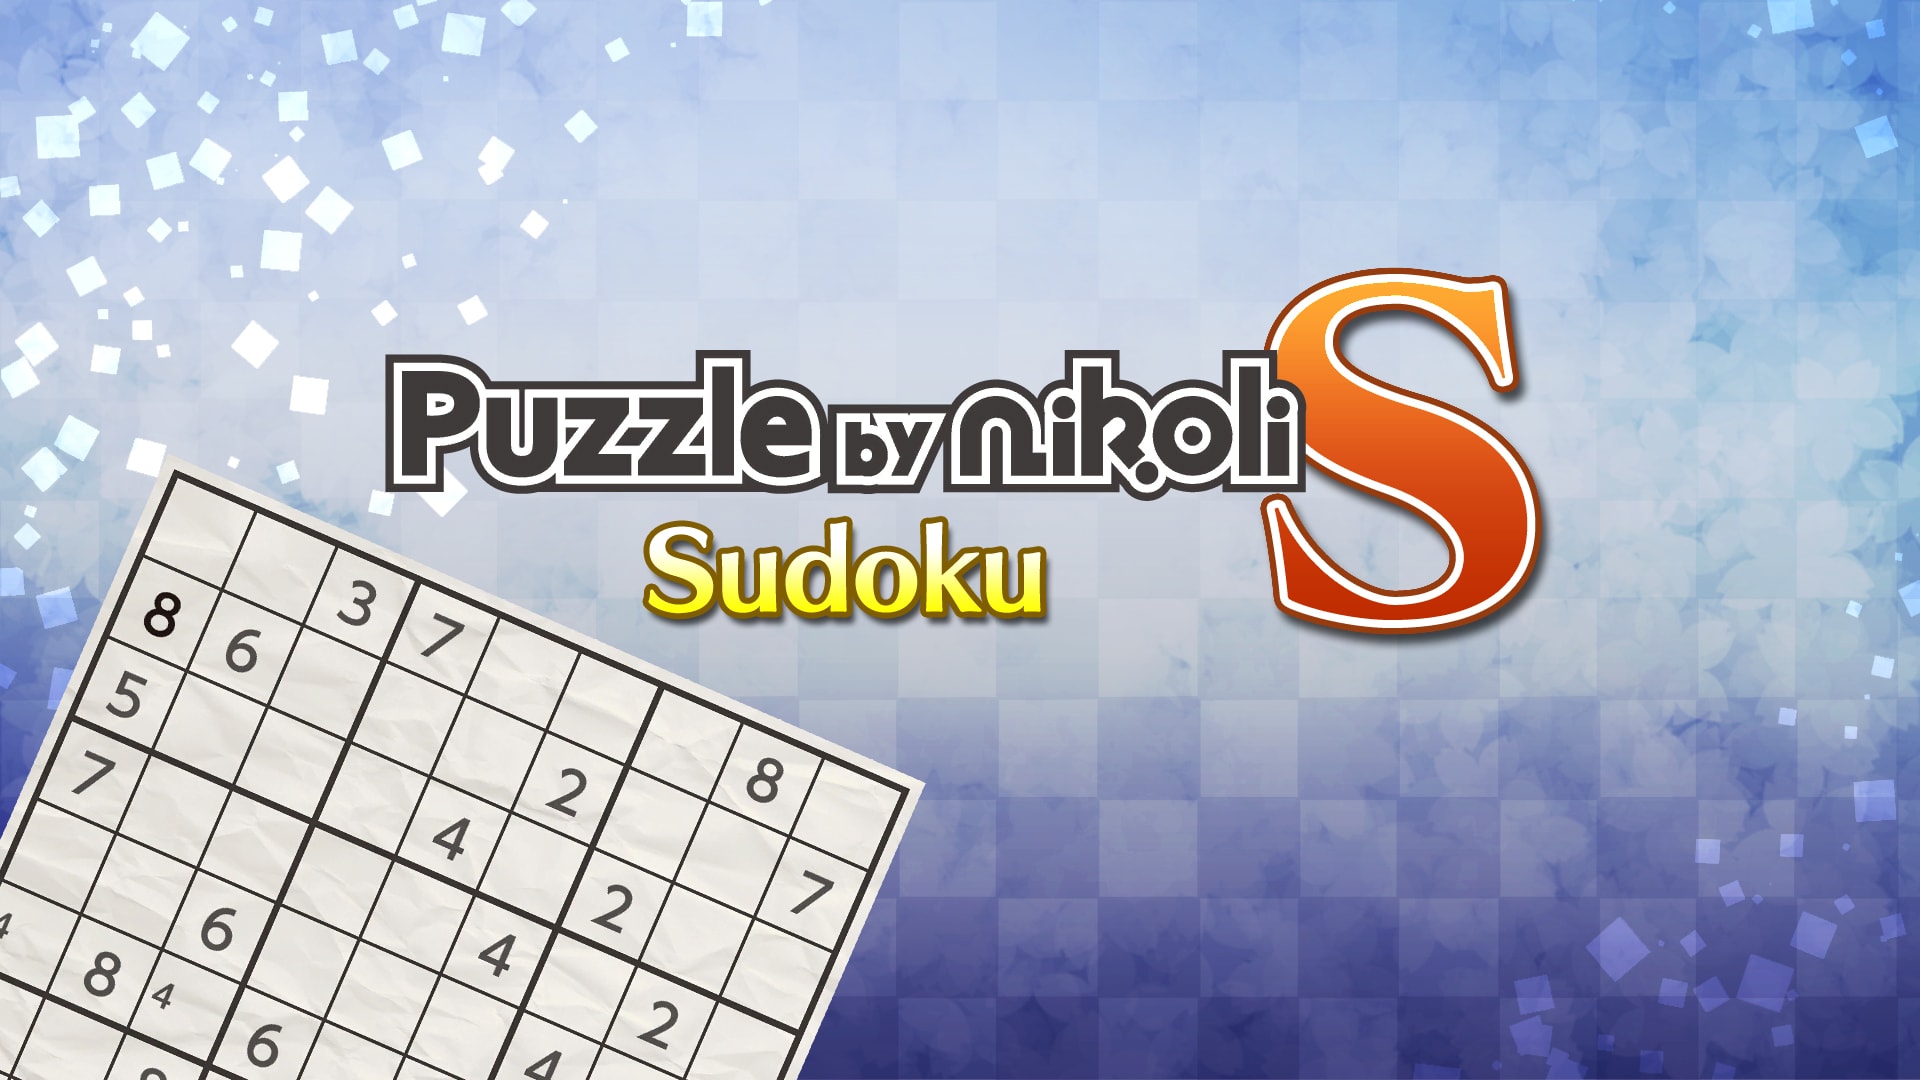 Puzzle by Nikoli S Sudoku